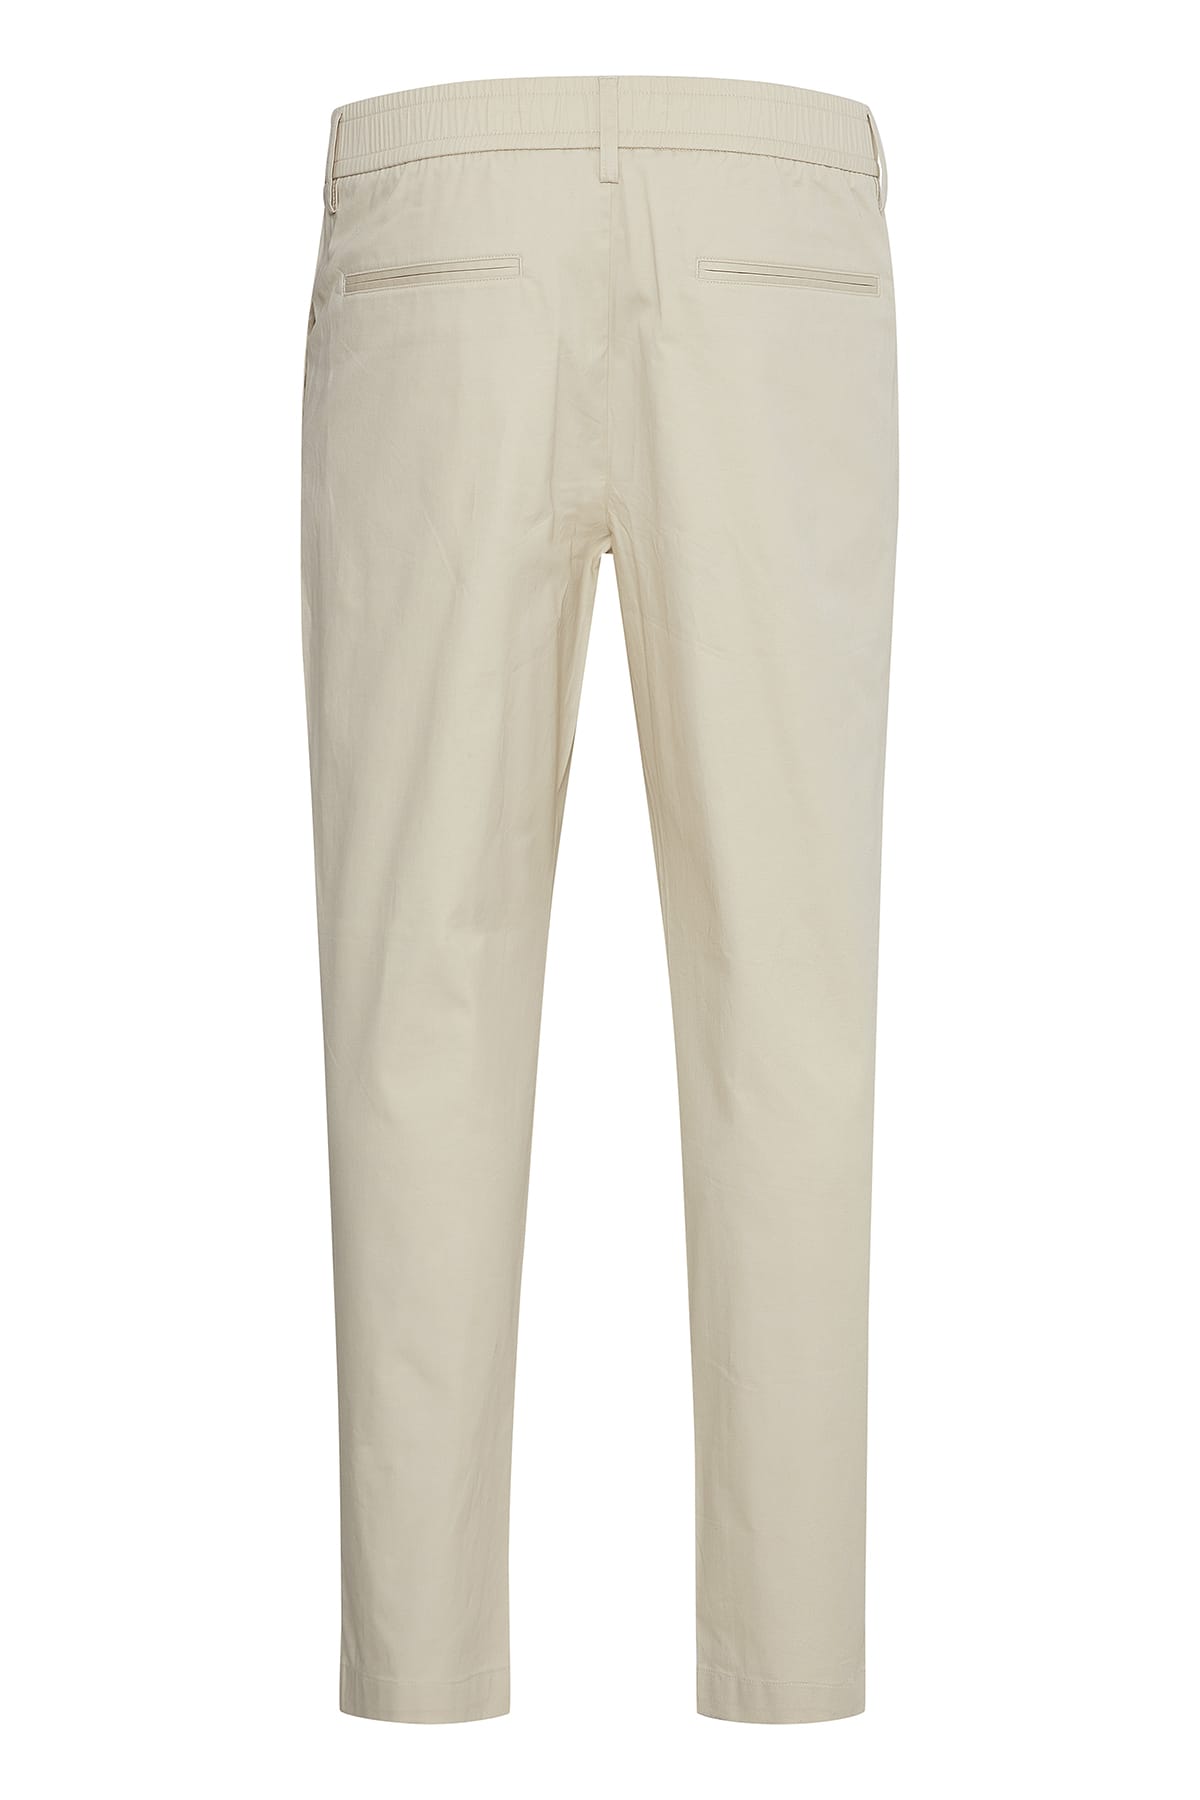 Hose CFMarc 0143 pleated pants White Asparagus Hose Casual Friday 